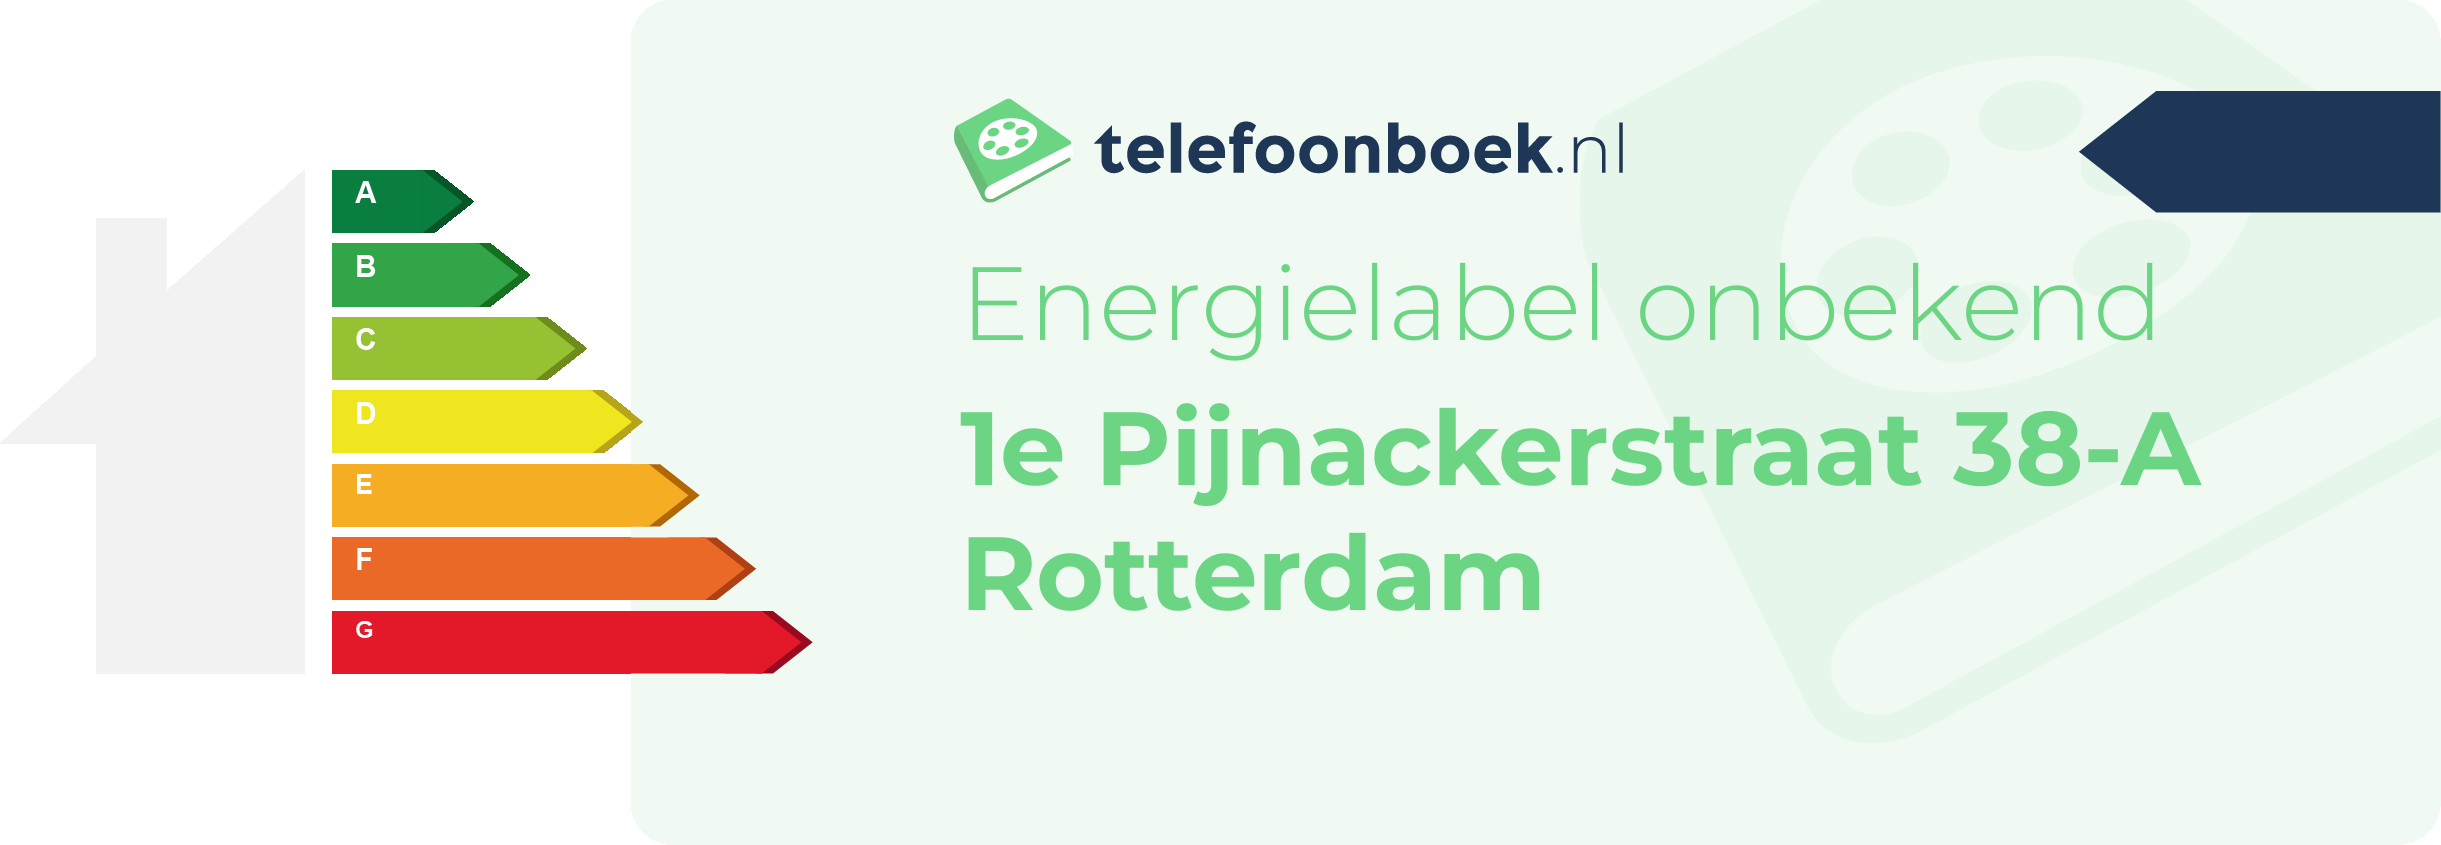 Energielabel 1e Pijnackerstraat 38-A Rotterdam